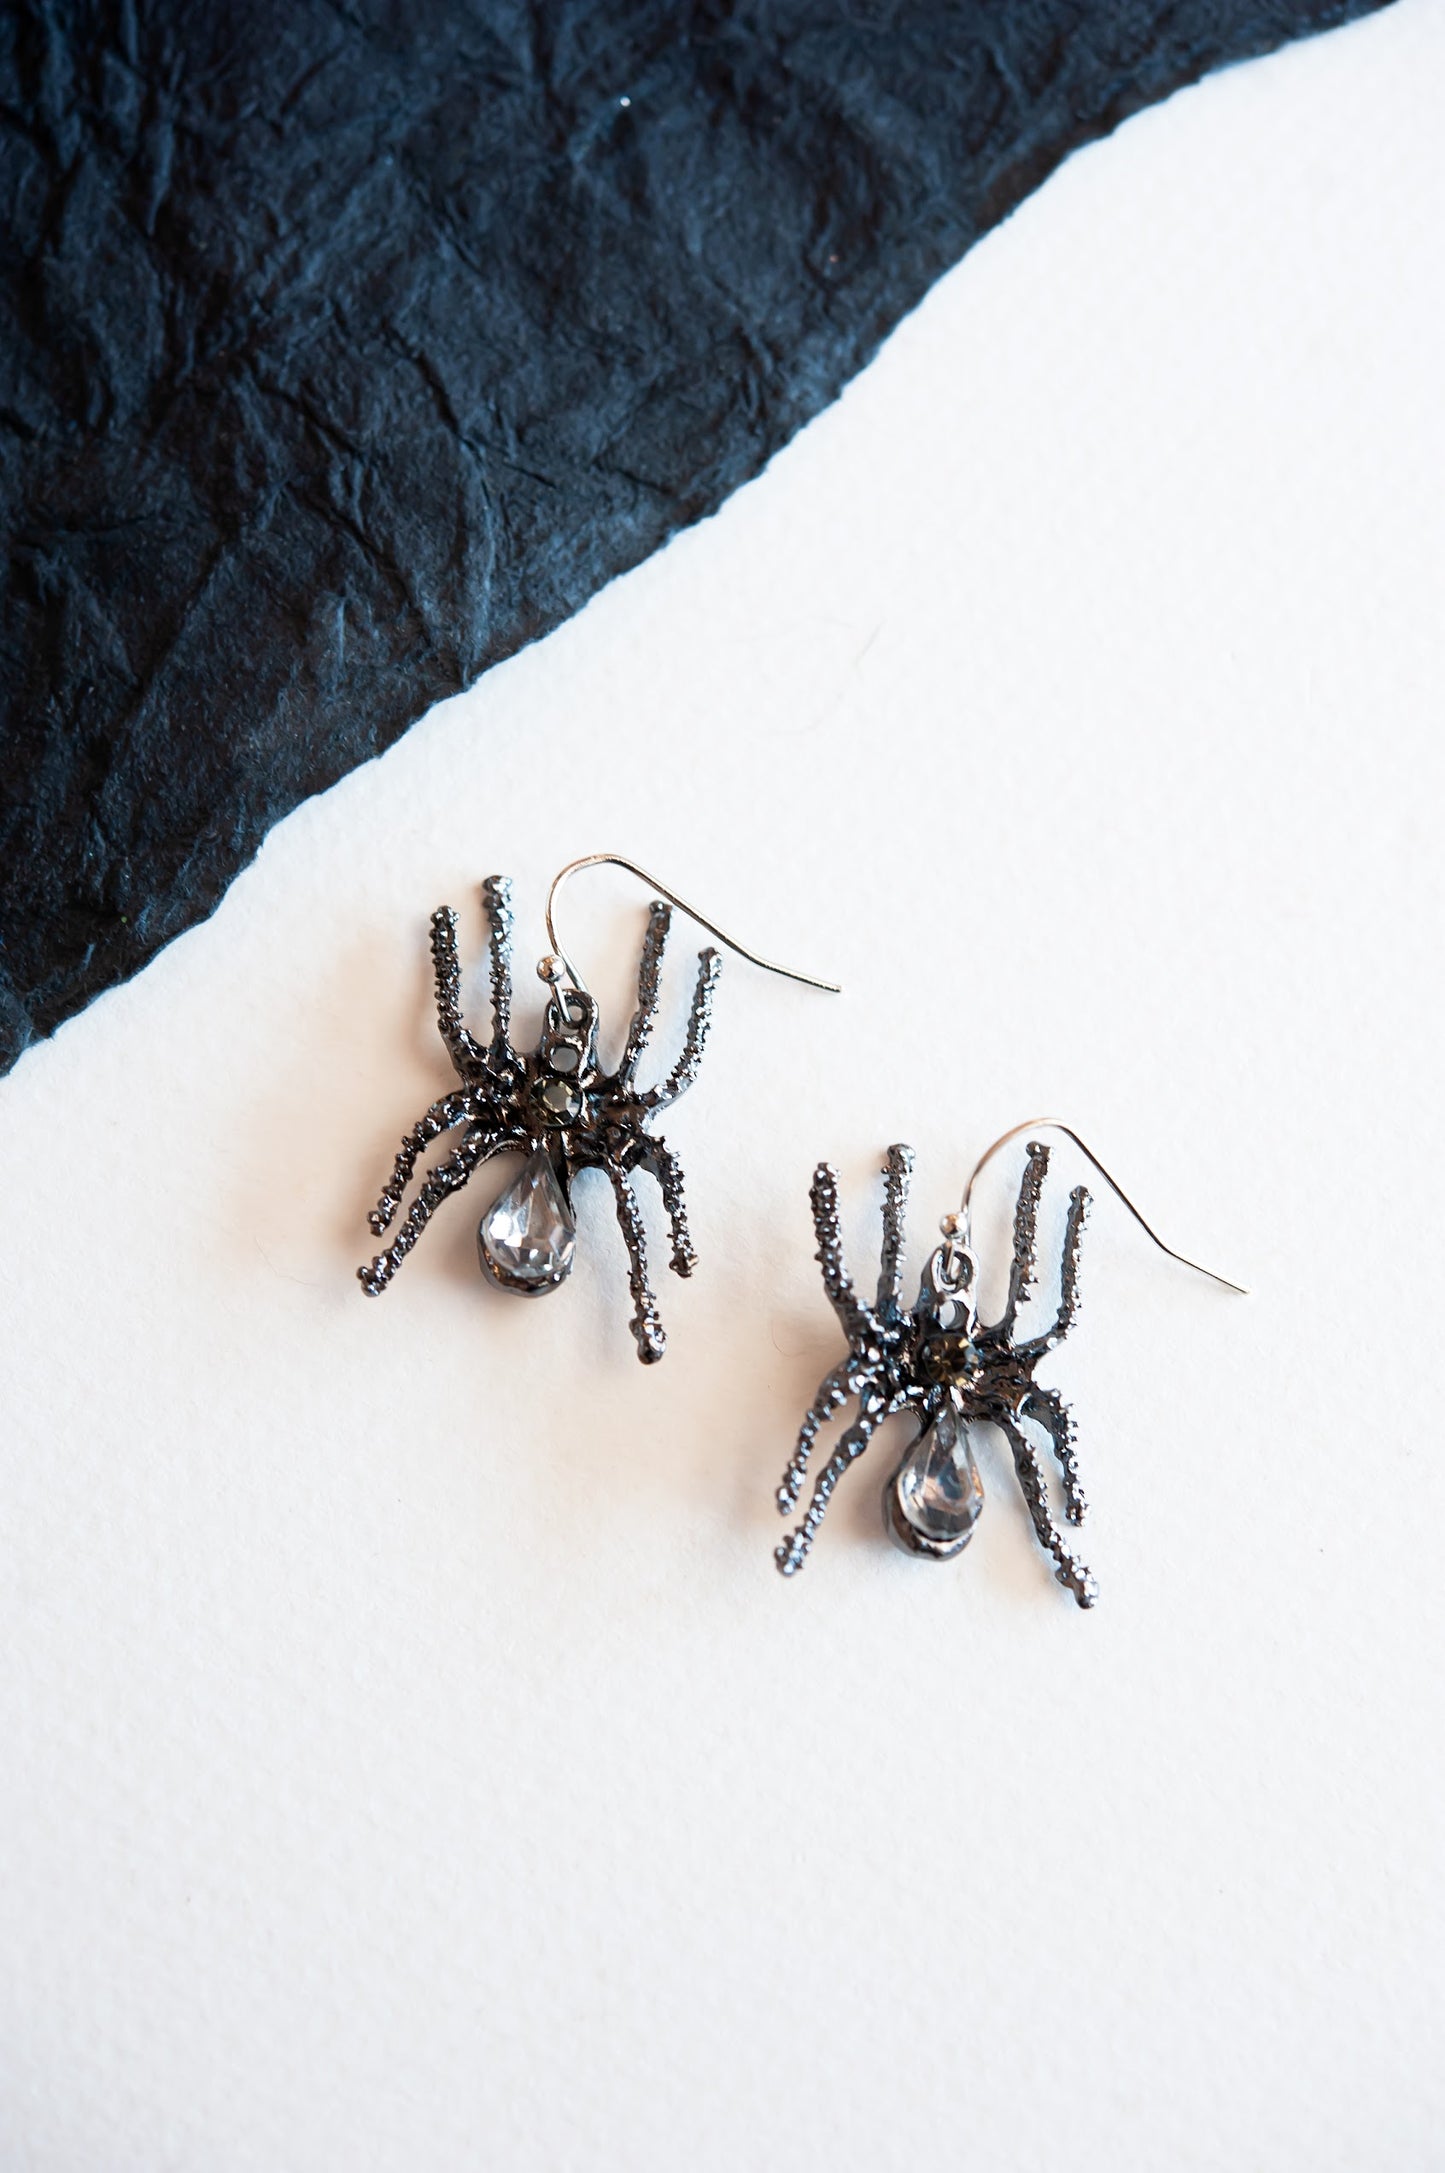 Hematite Spider Earrings | Creepy Halloween Spider Earrings | Bug Jewelry | Black Widow Gothic Earrings